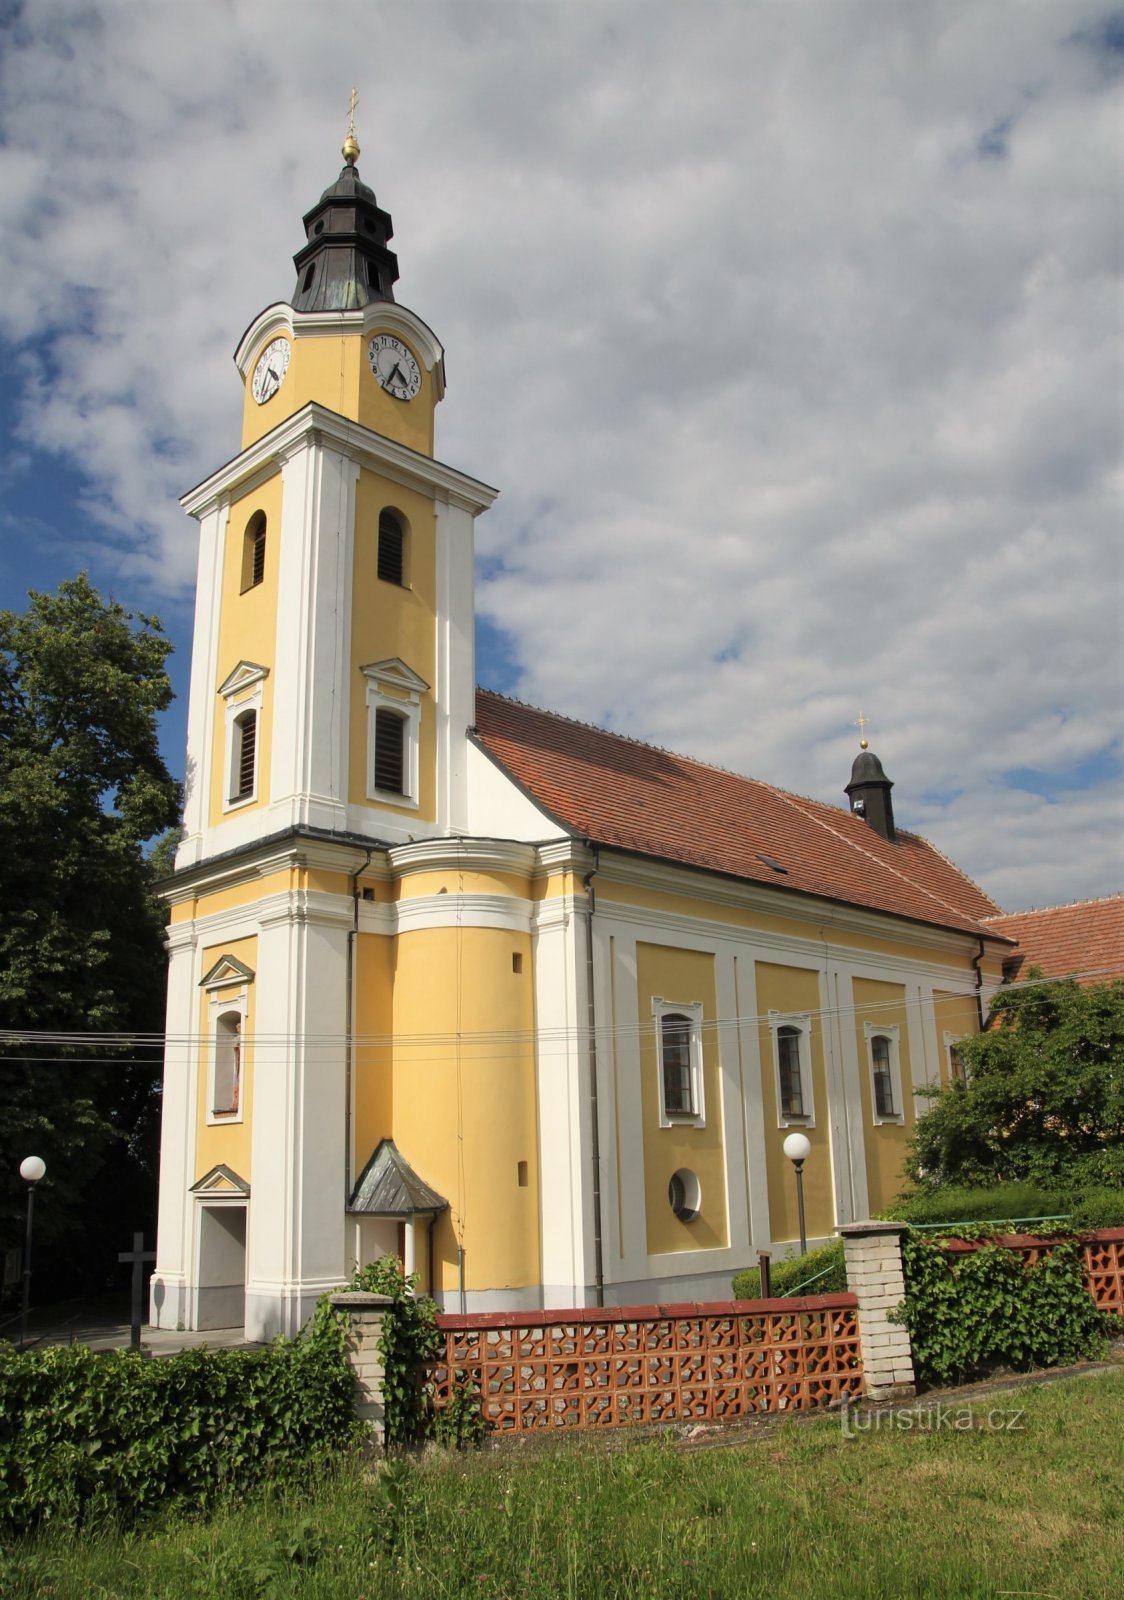 Mutěnice - church of St. Catherine